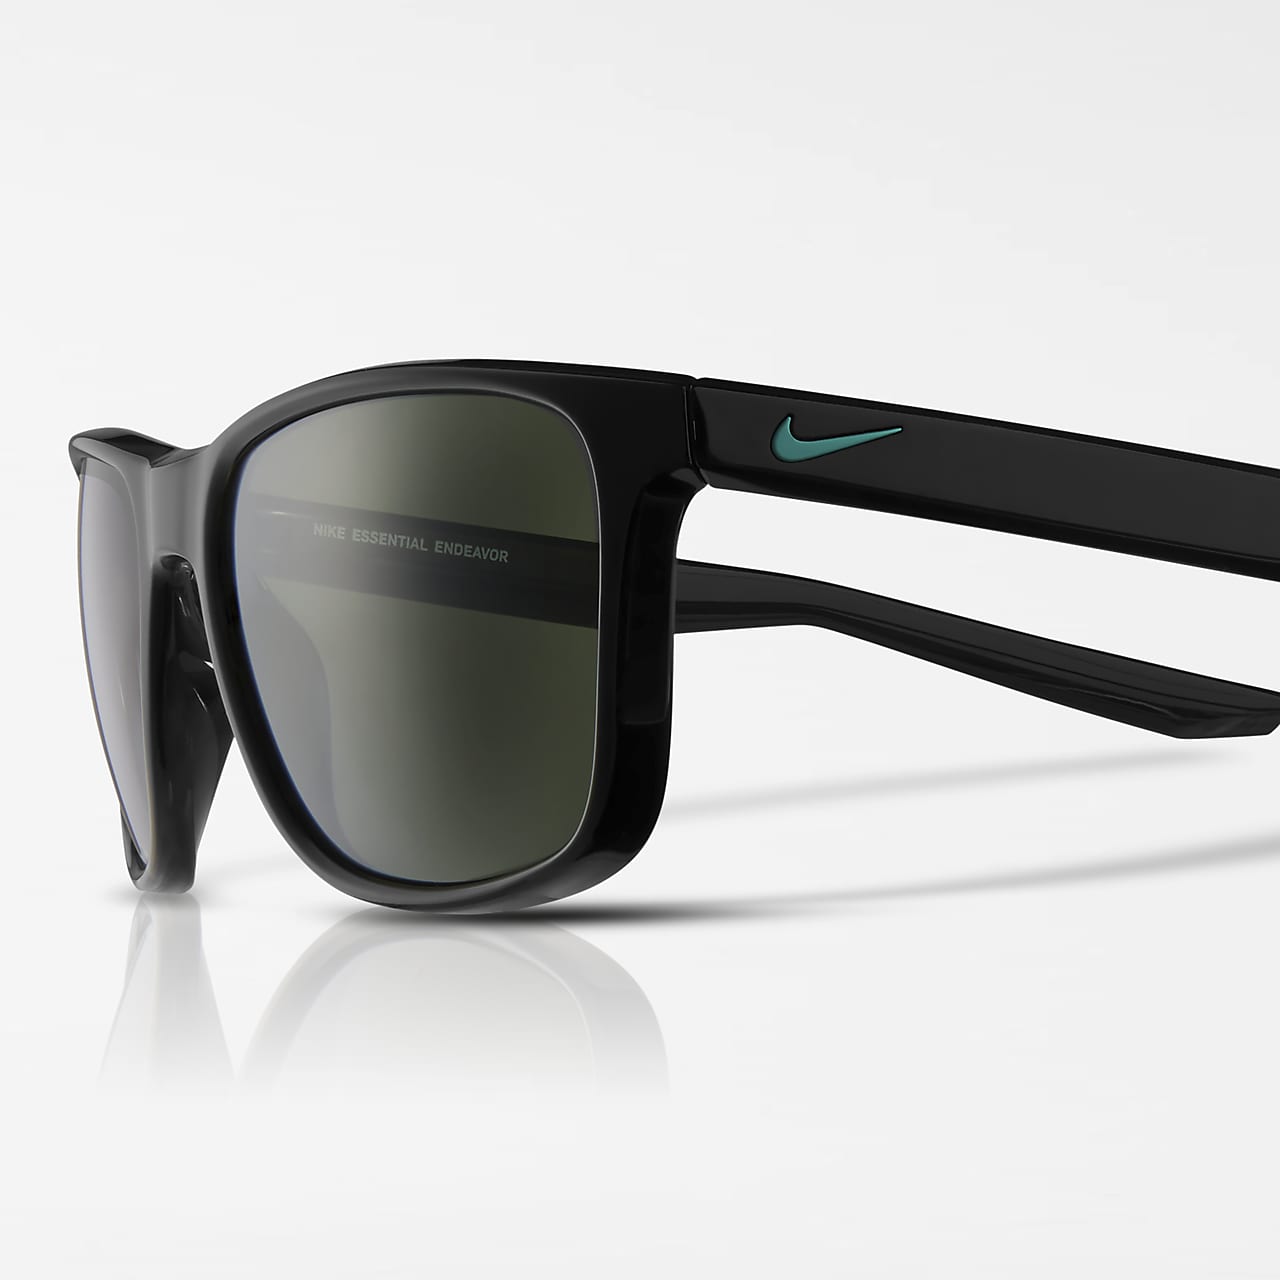 Nike Essential Endeavor Sunglasses 